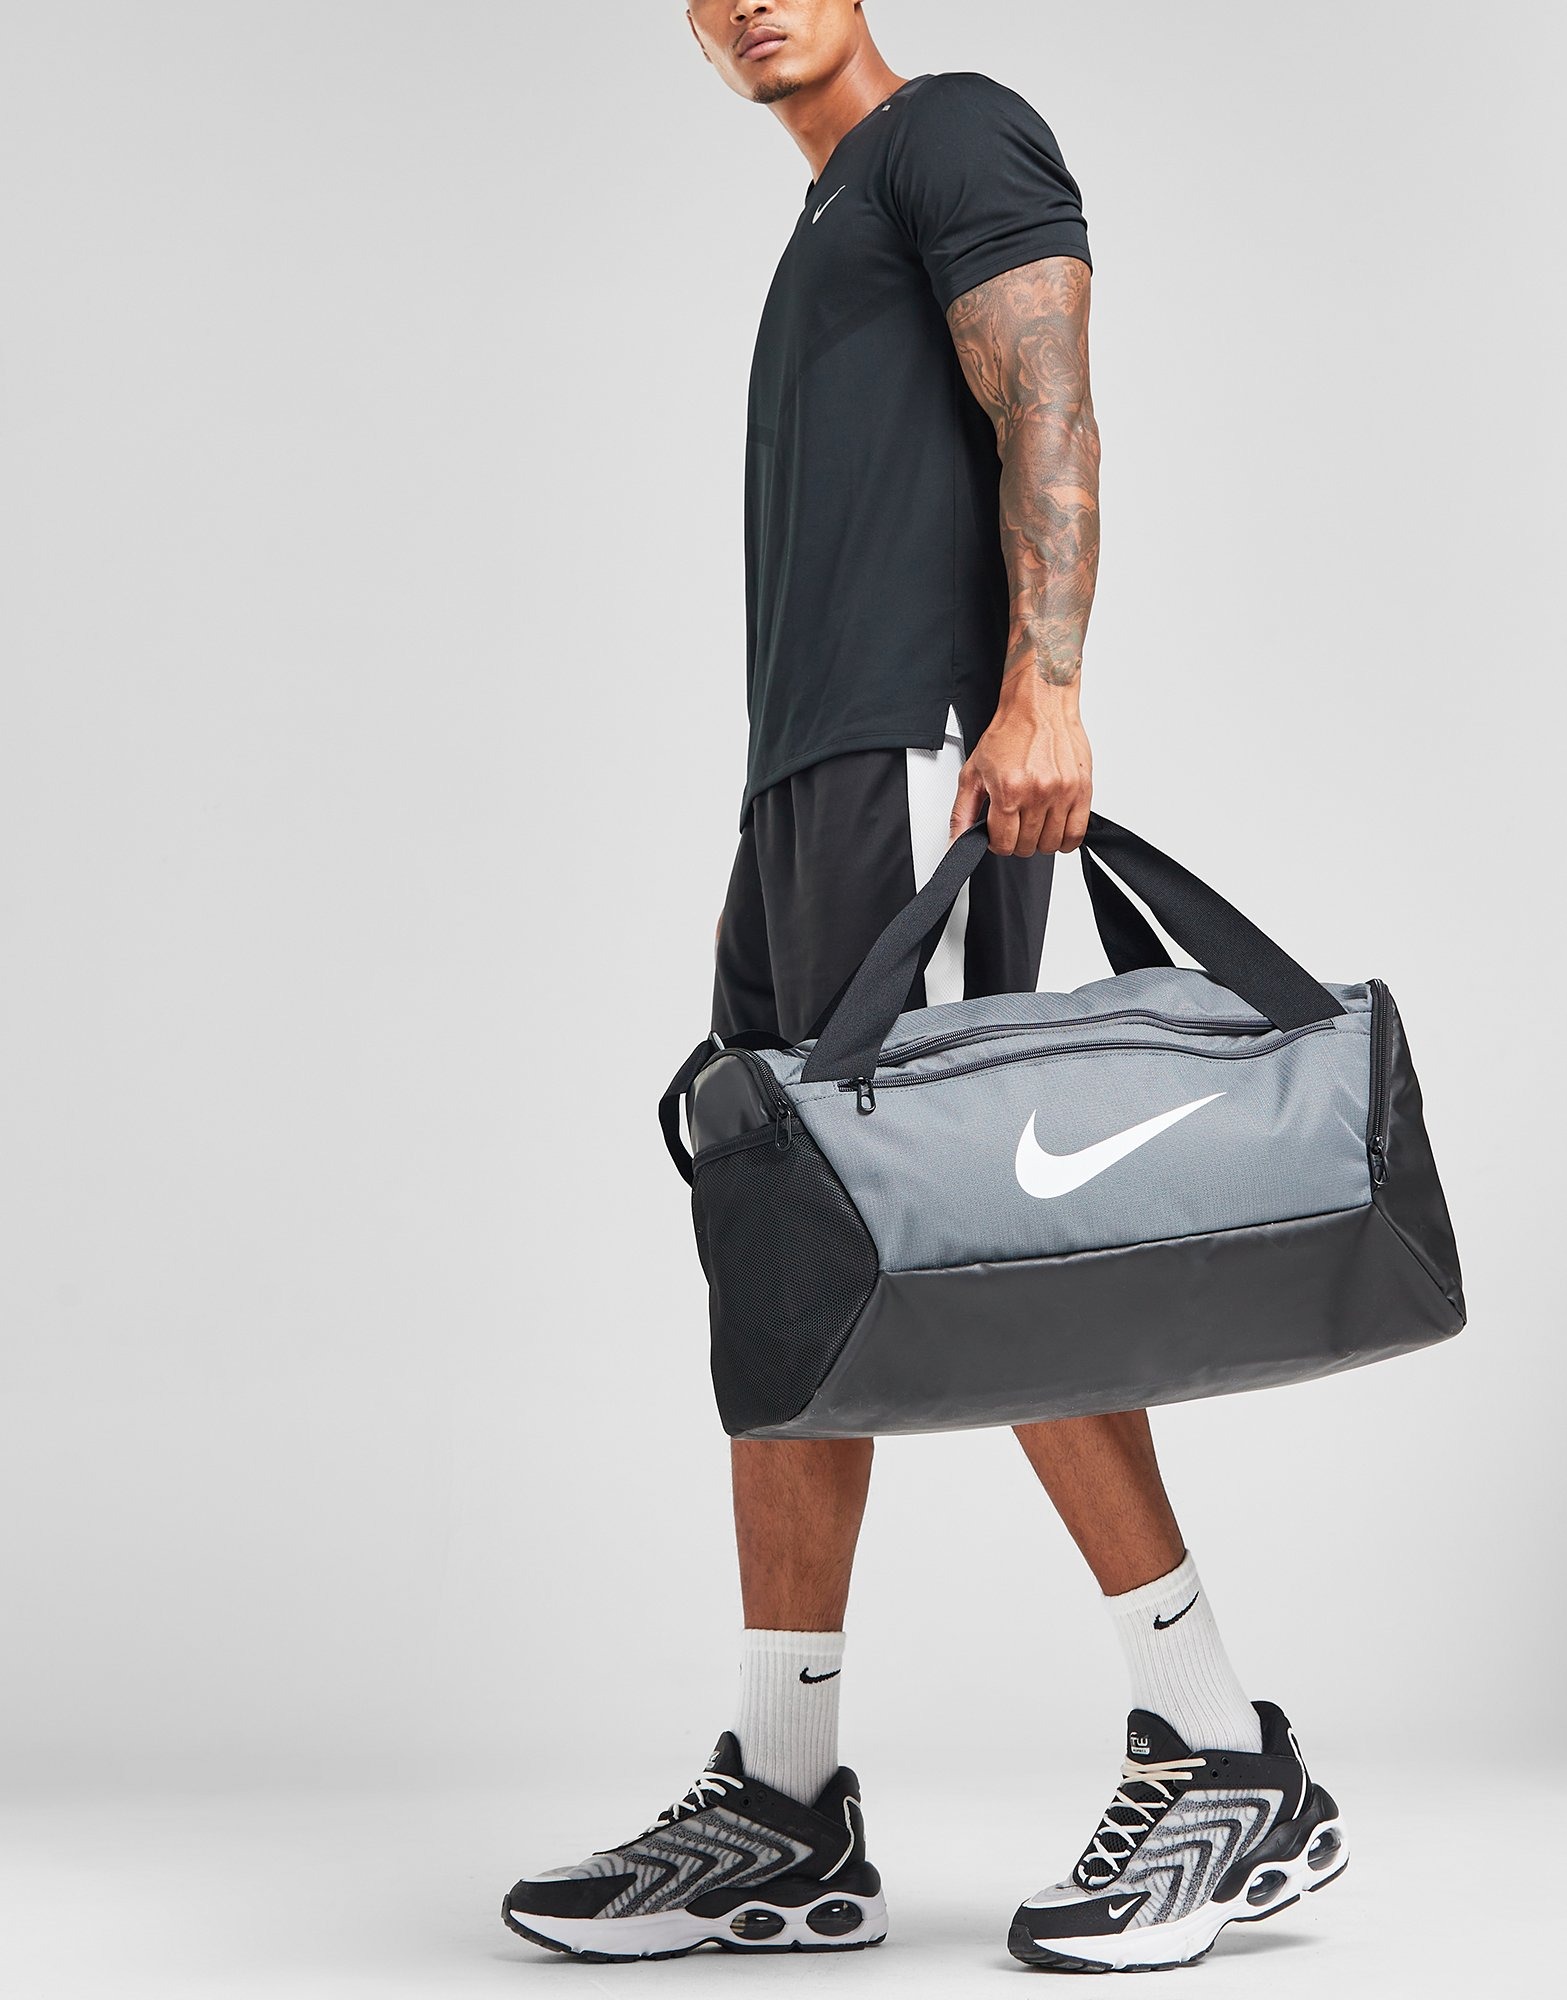 aan de andere kant, Zuidoost Haiku Grey Nike Small Brasilia Bag | JD Sports Global